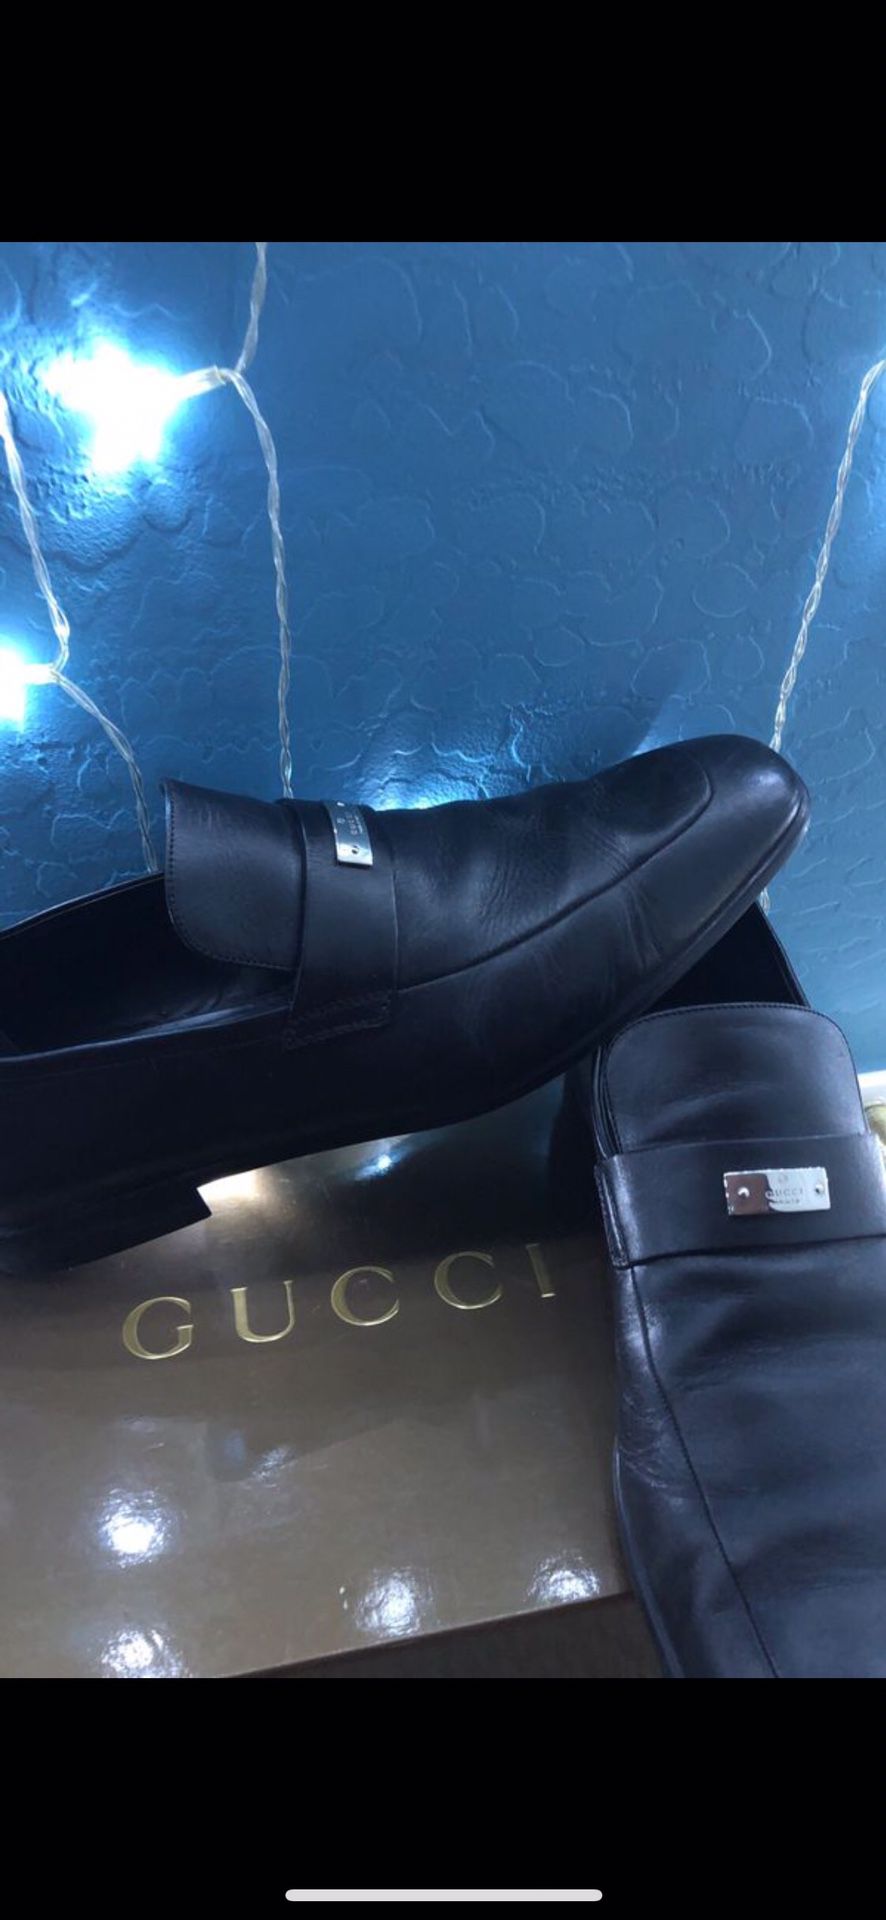 Gucci dress shoes